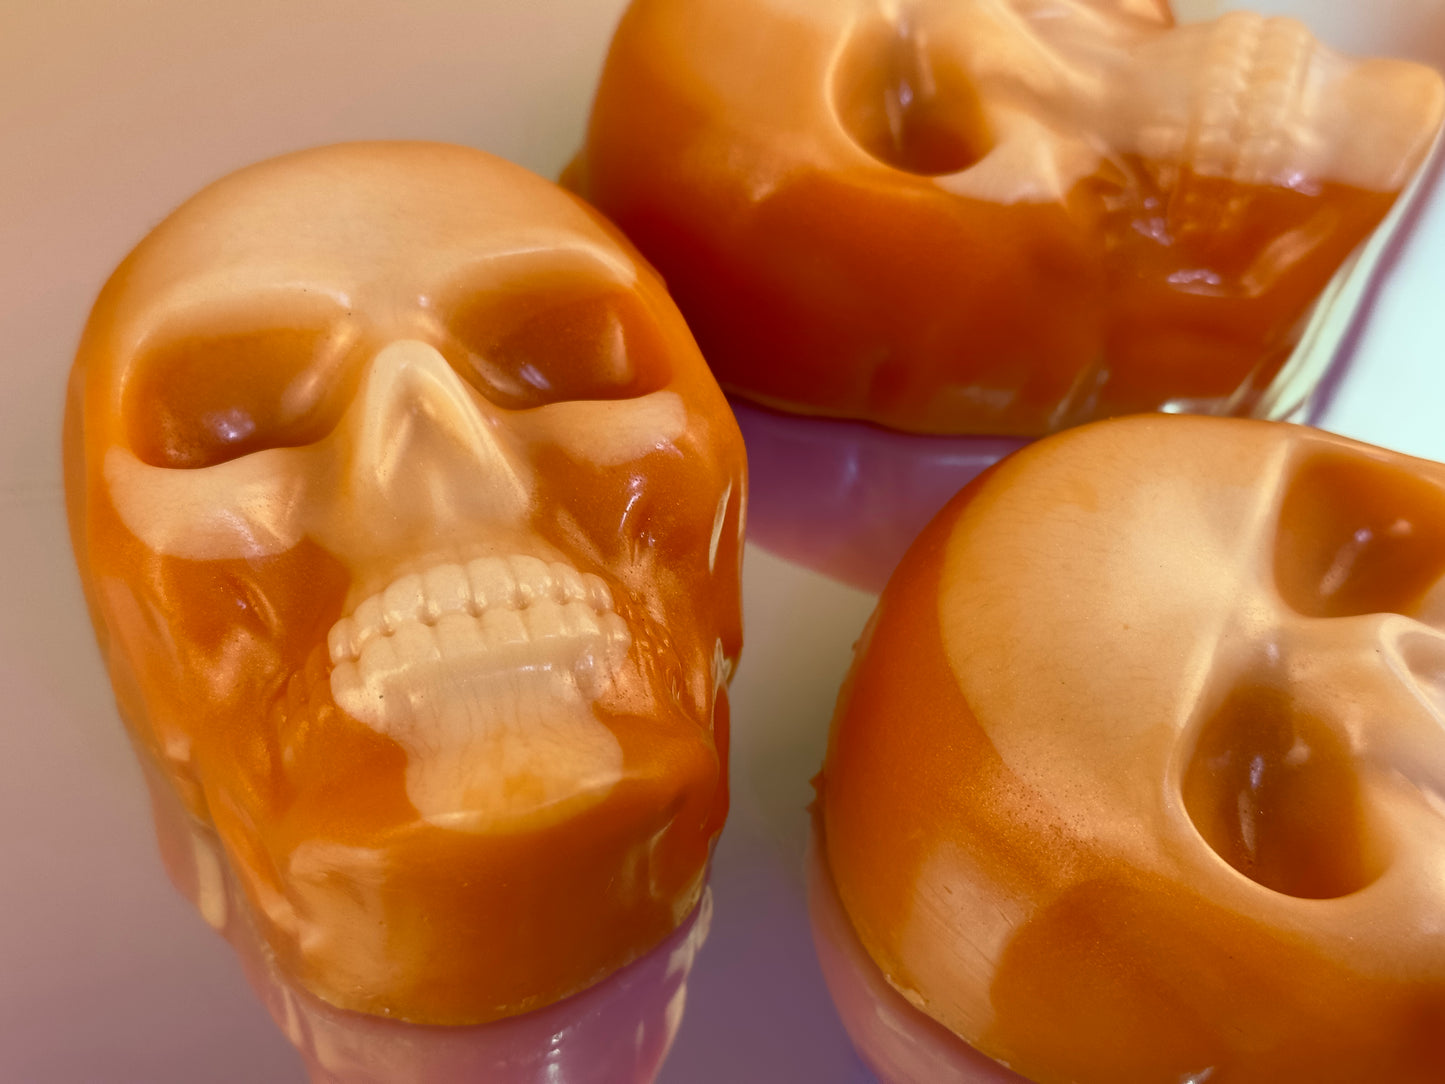 HOPPY HALLOWEEN | XXL Skull Shaped Pumpkin Cream Beer Scented Bar Soap